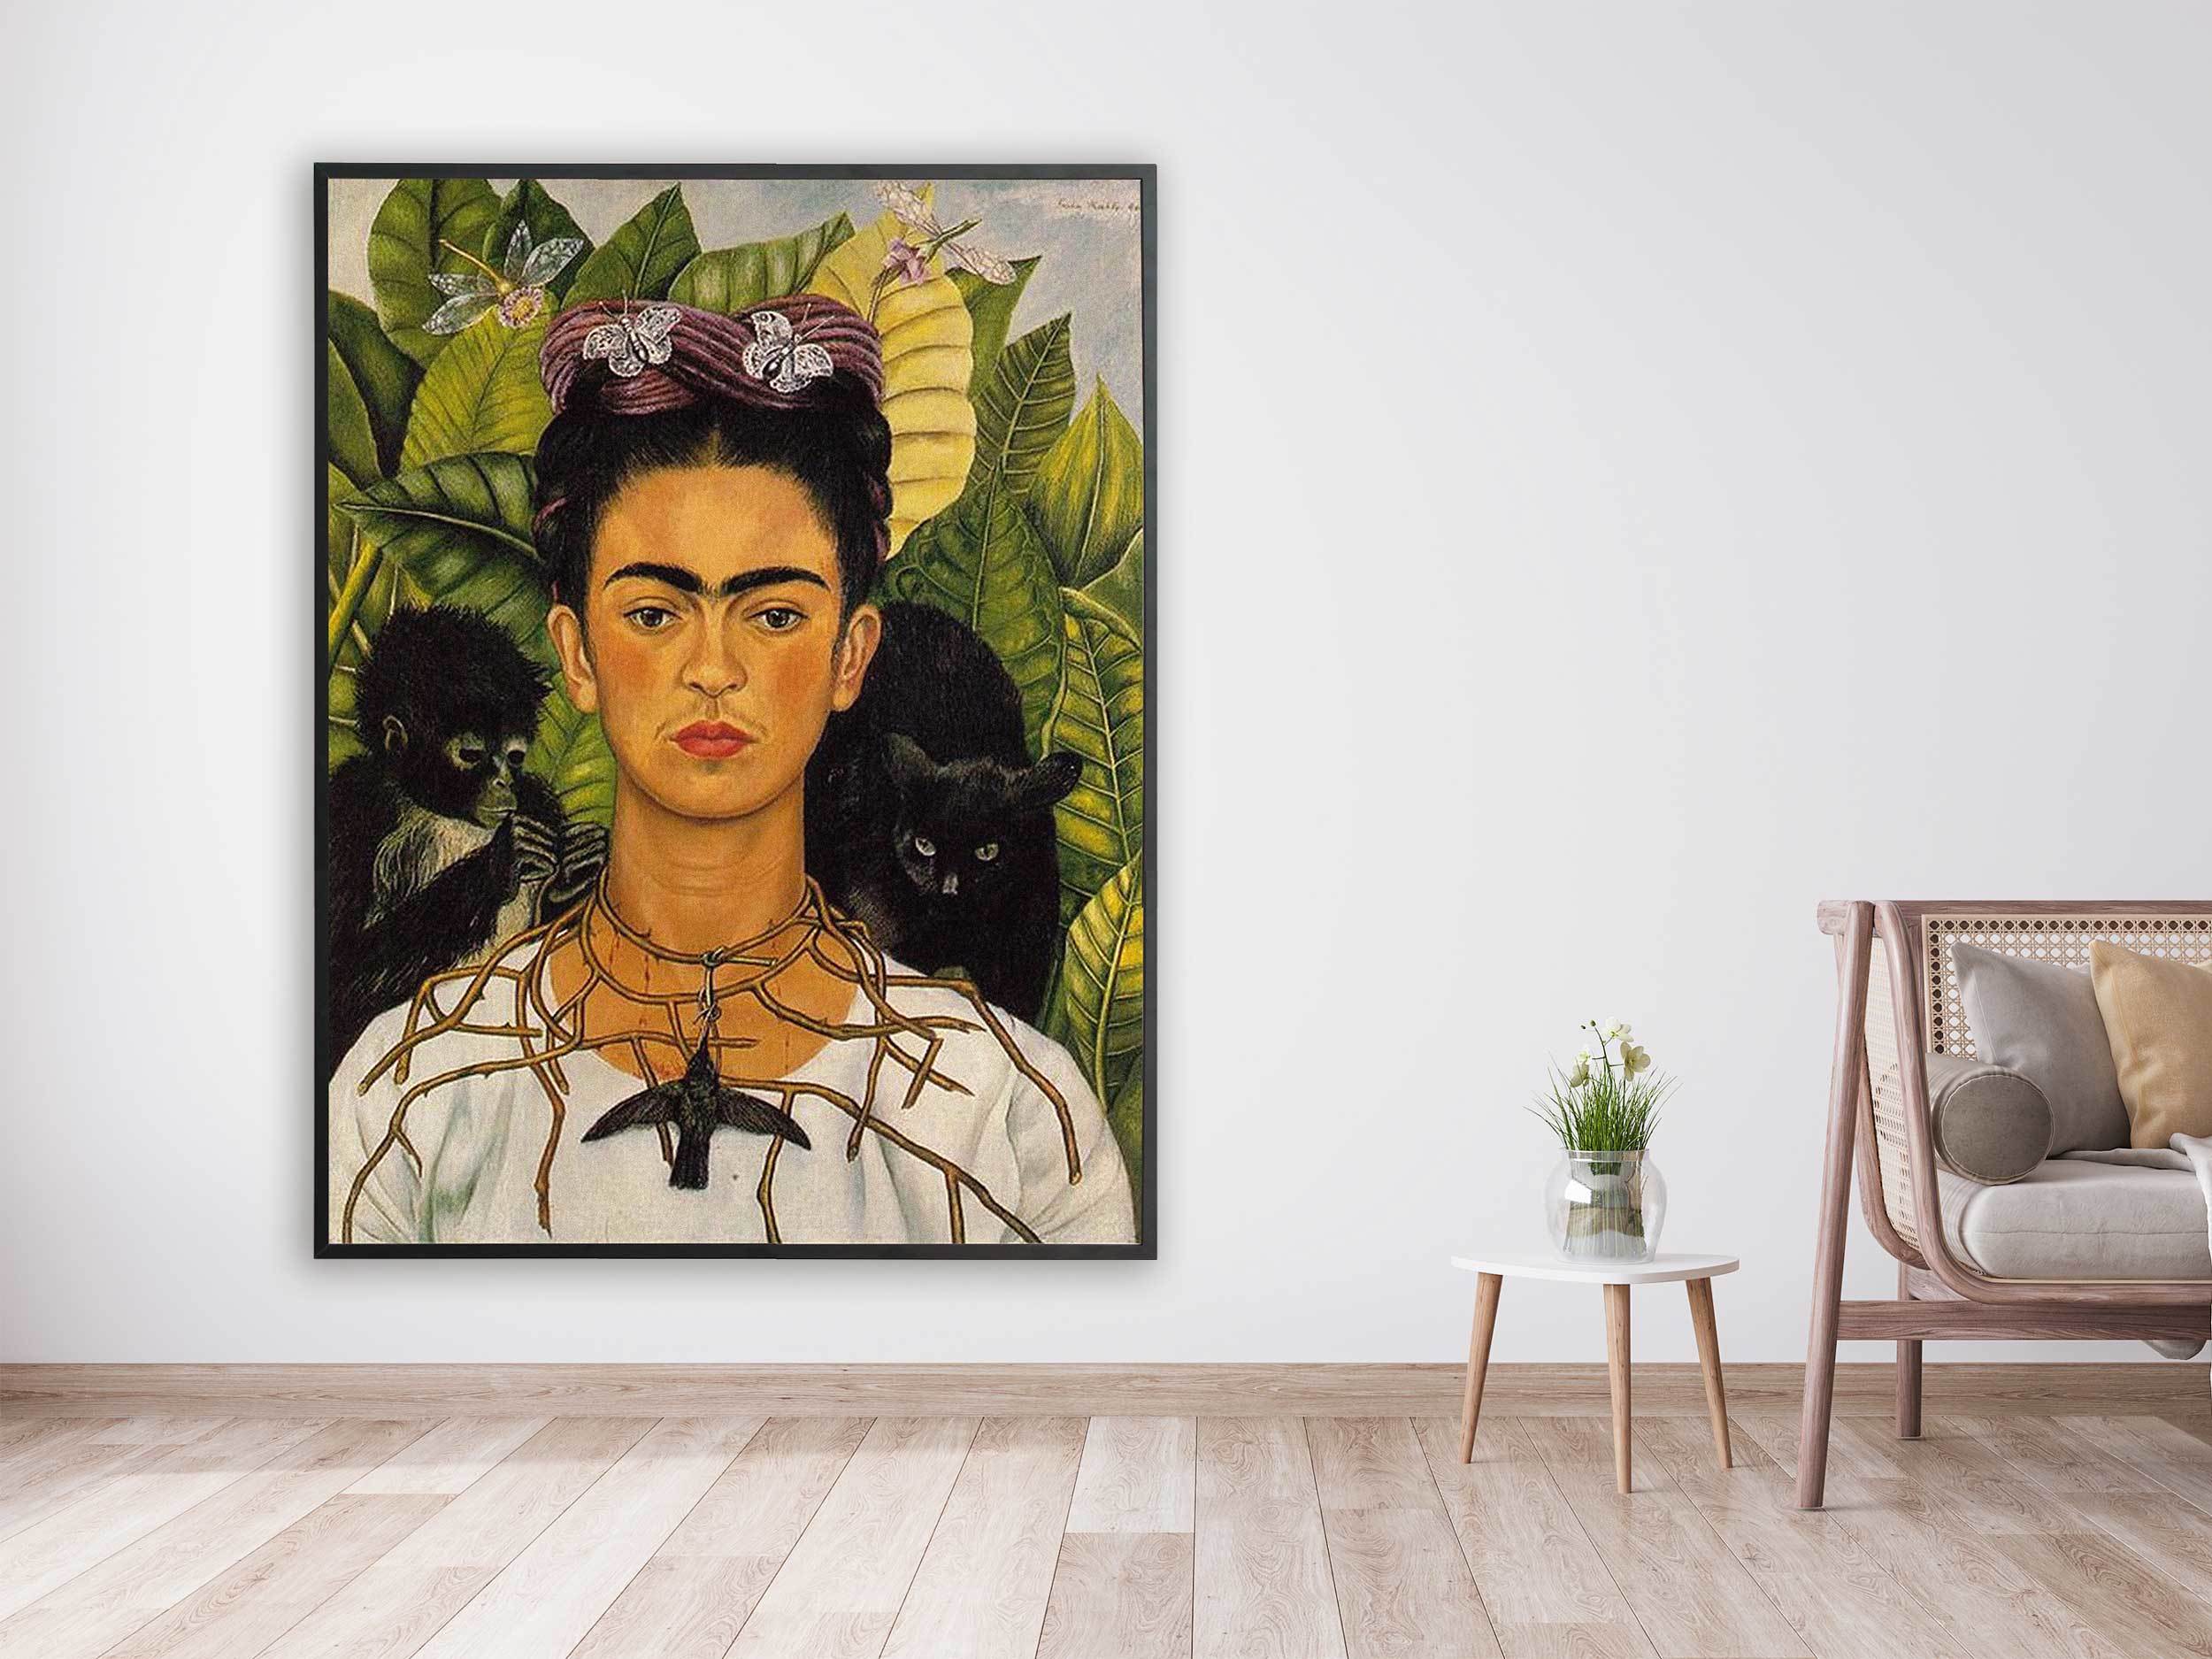 Frida Kahlo -  Self-portrait with Thorn Necklace and Hummingbird, 1940, Bilderrahmen schwarz